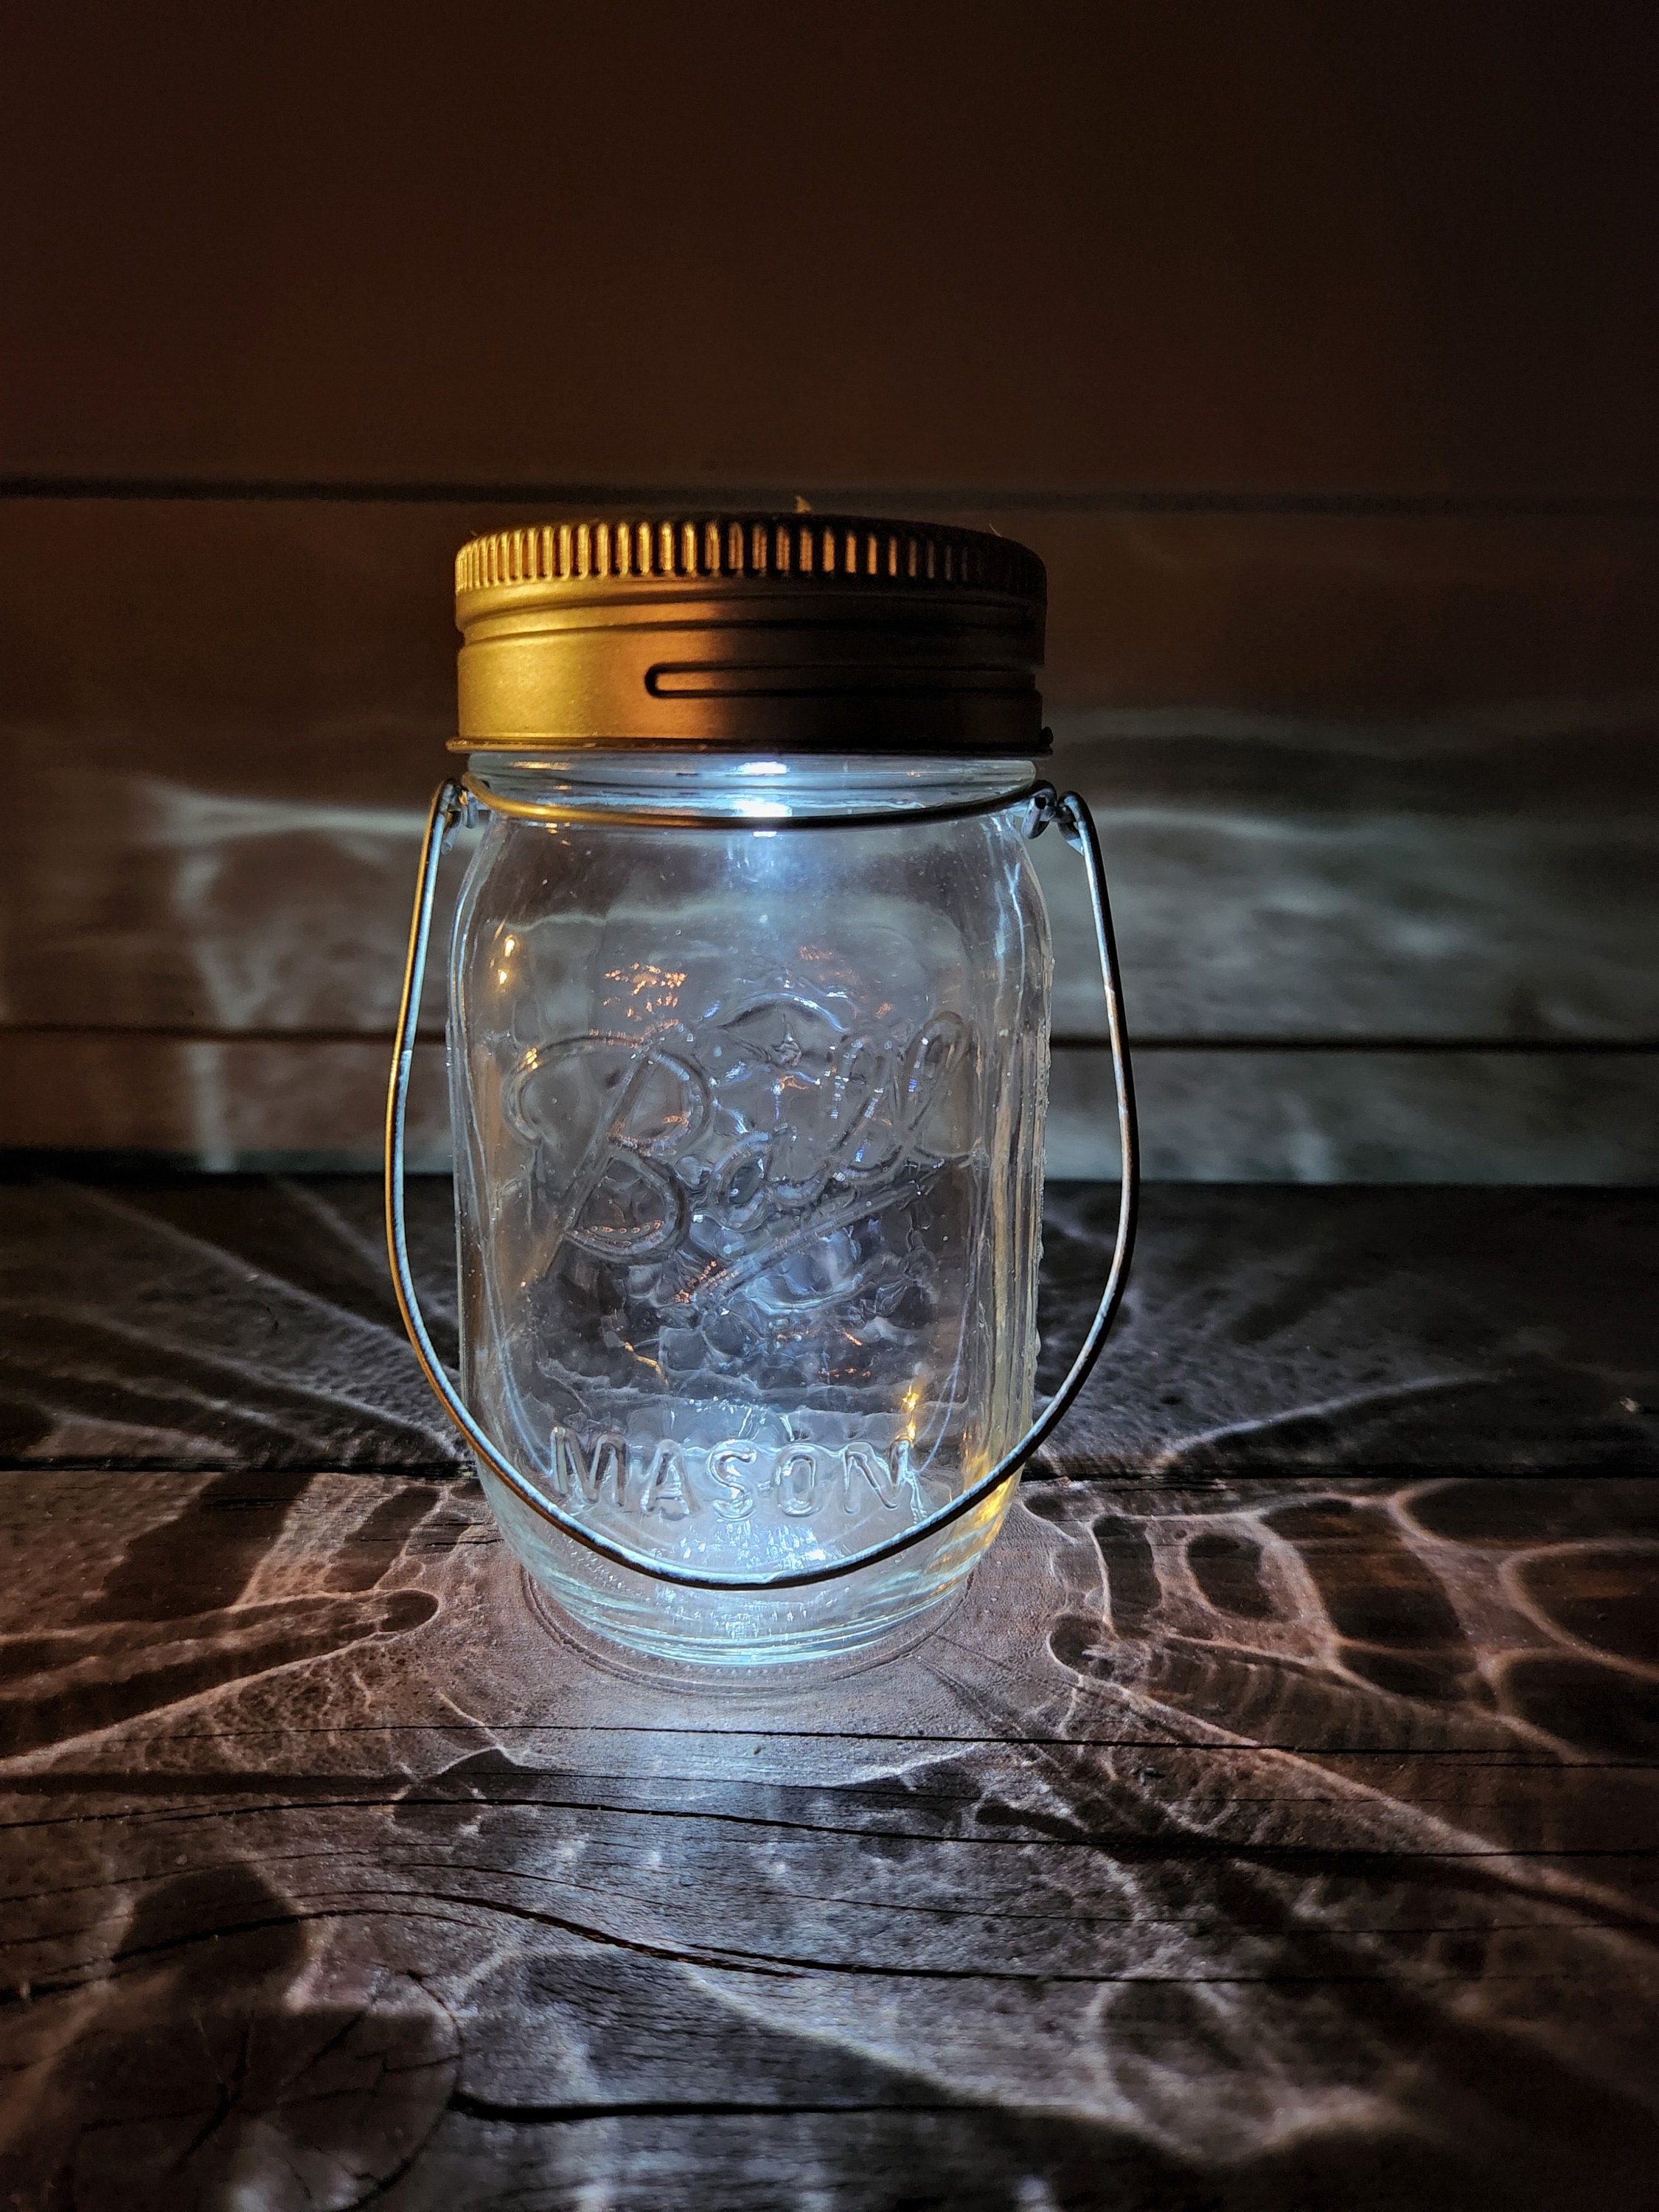 Vcdsoy Solar Fairy Lantern Mason Jar 4 Pack-fairy Lantern, Multicolor